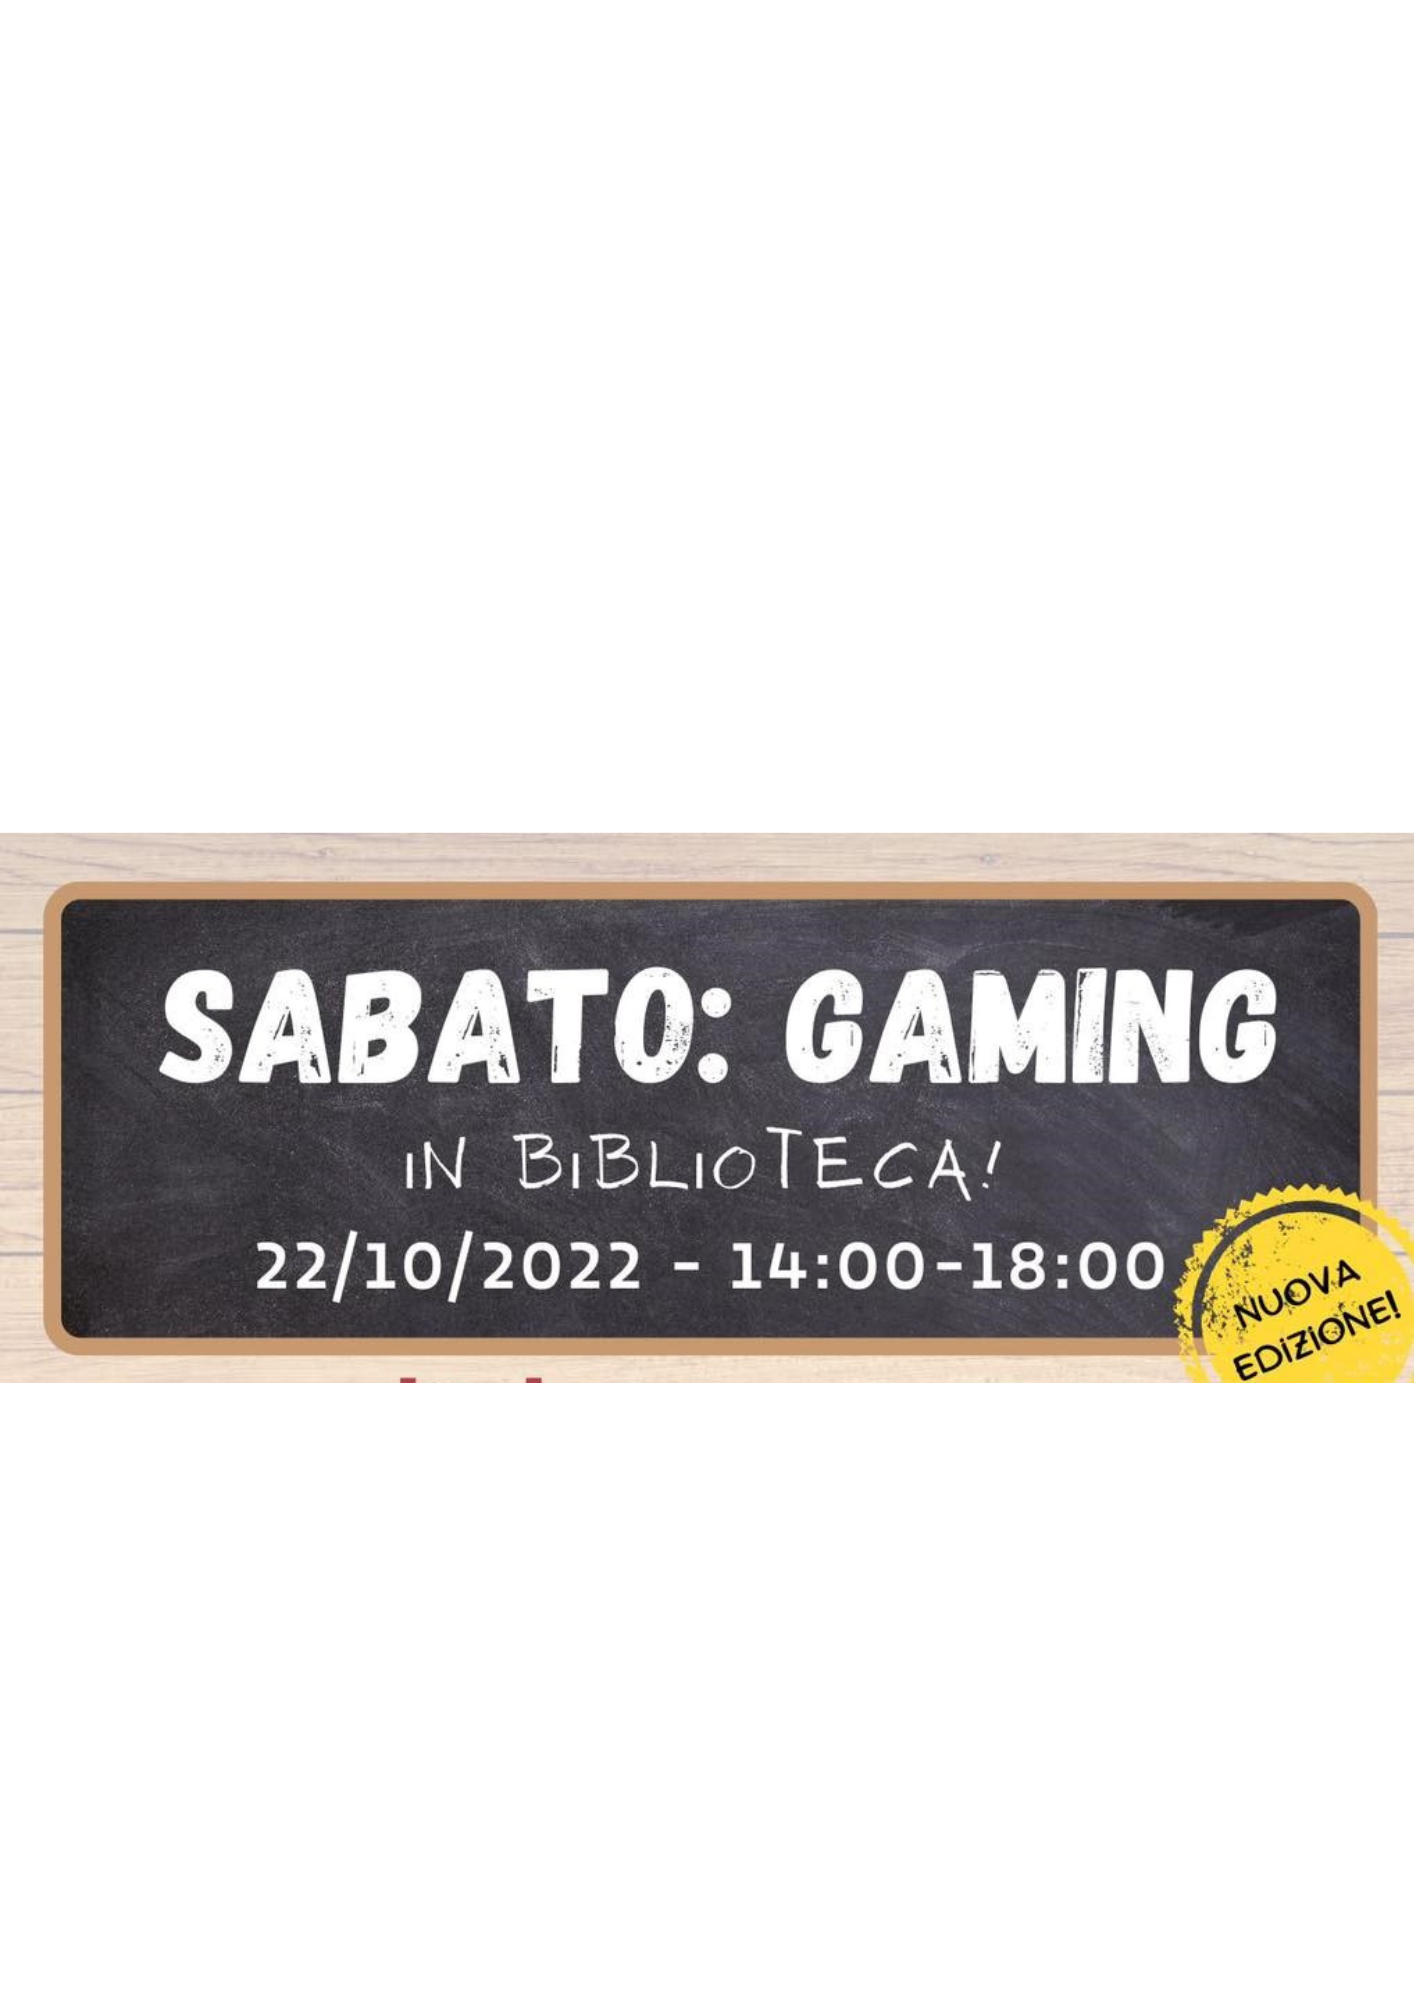 Sabato: Gaming